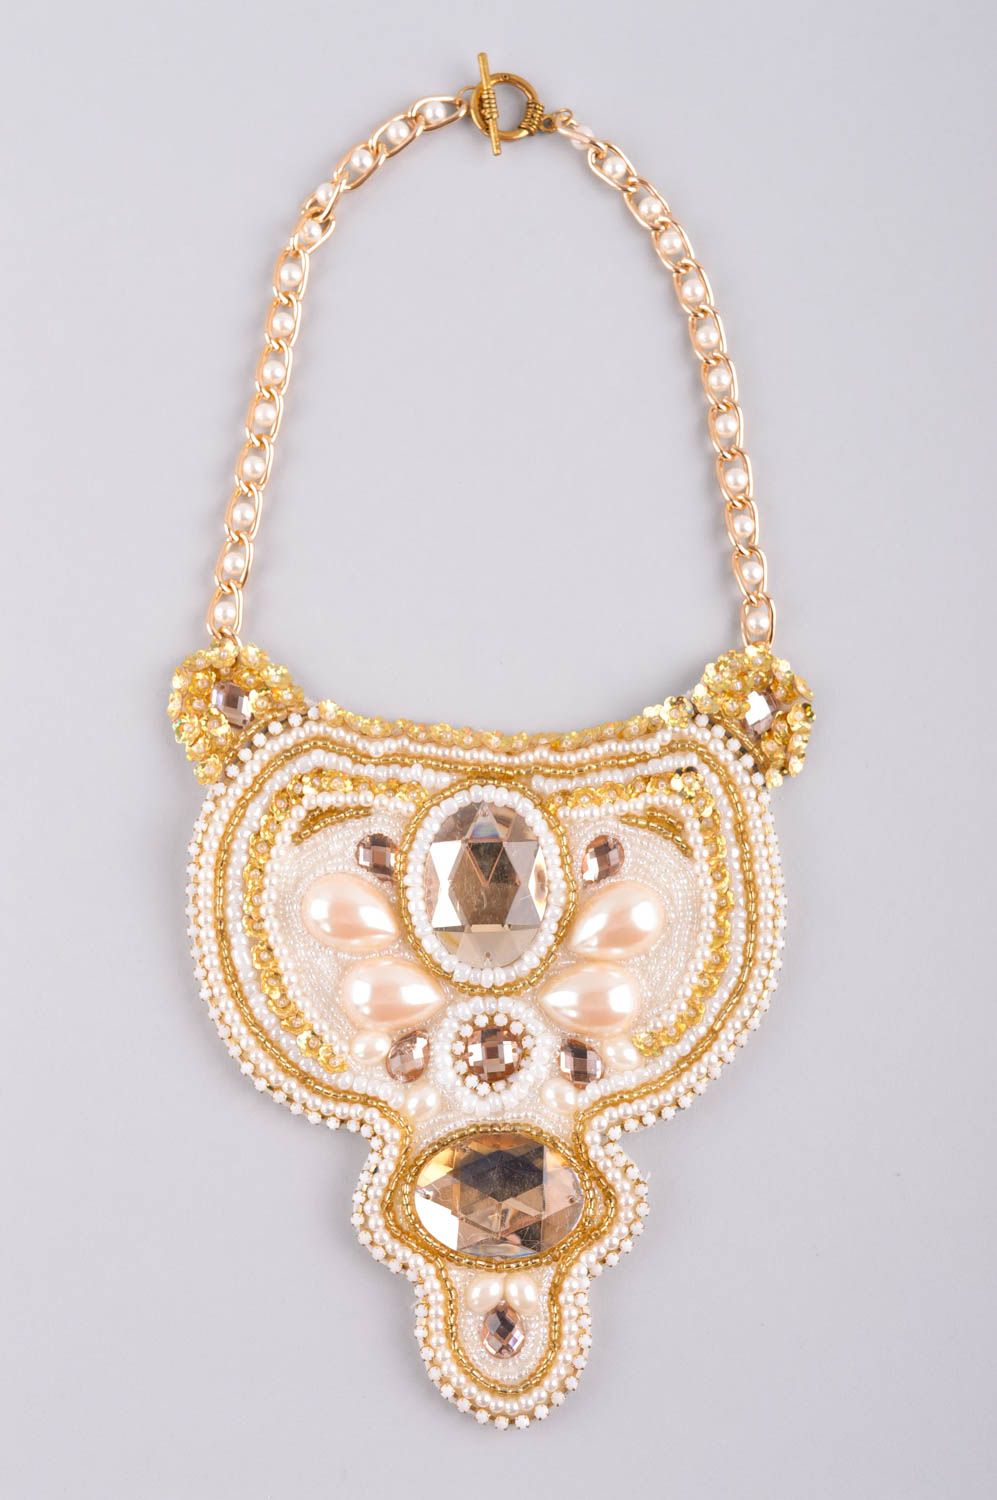 Handmade necklace designer accessory unusual gift beautiful beads jewelry photo 2